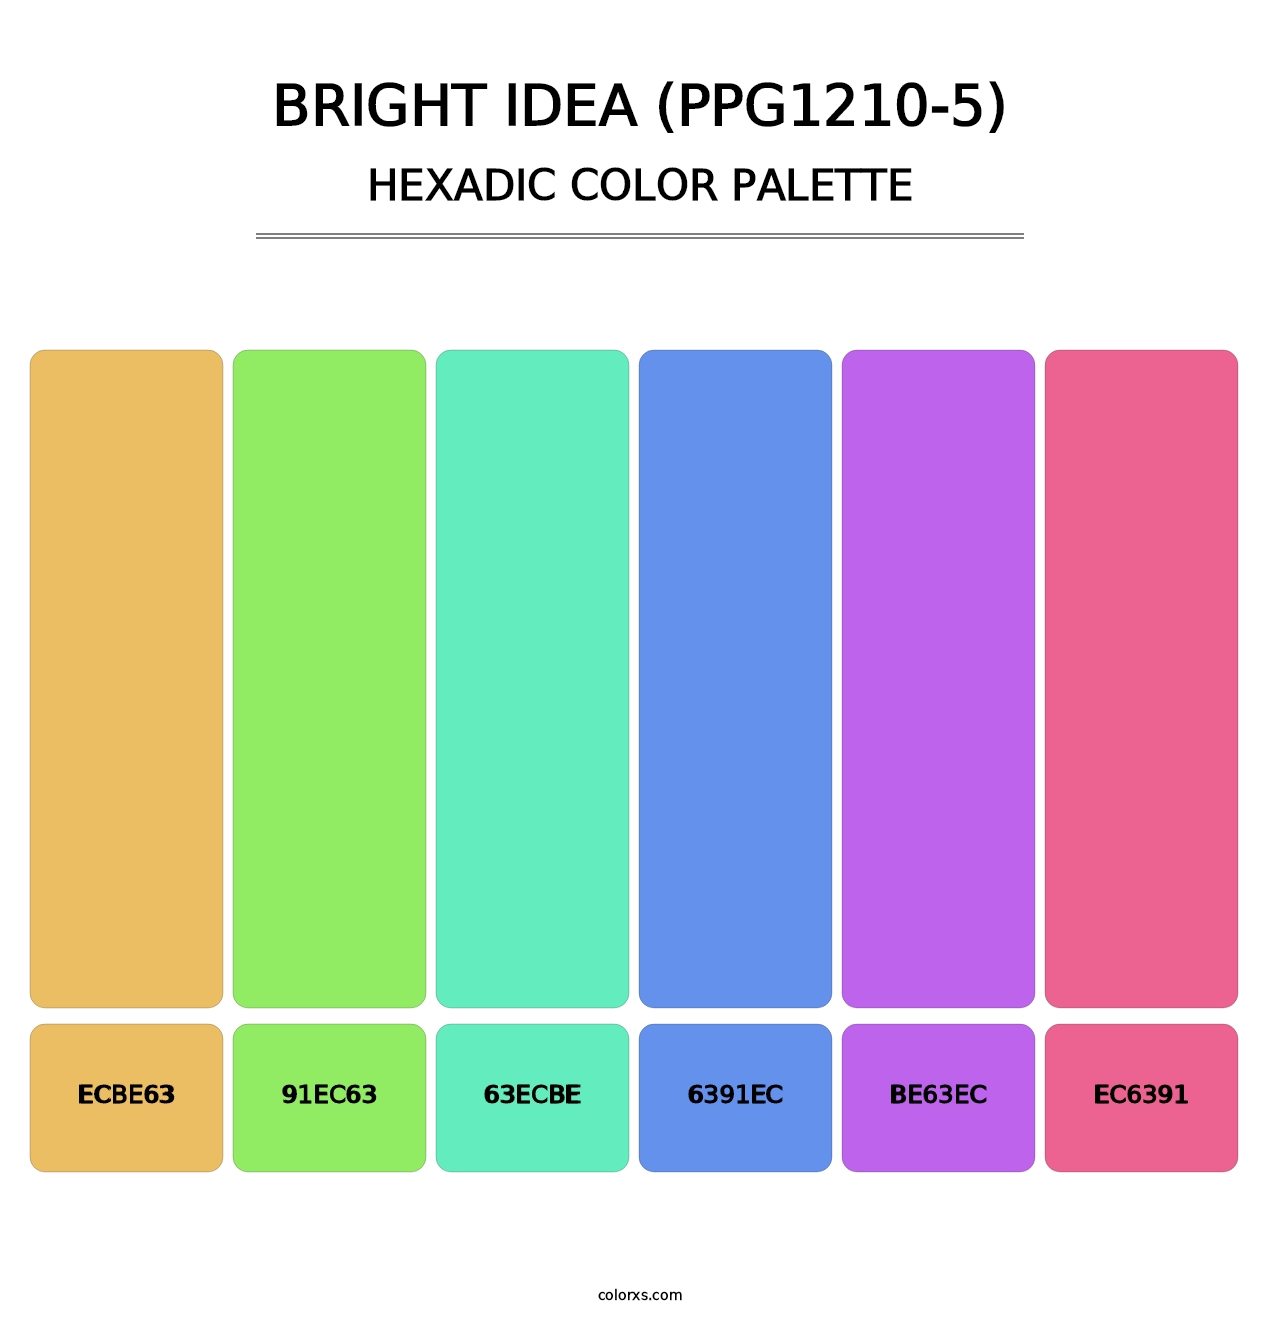 Bright Idea (PPG1210-5) - Hexadic Color Palette